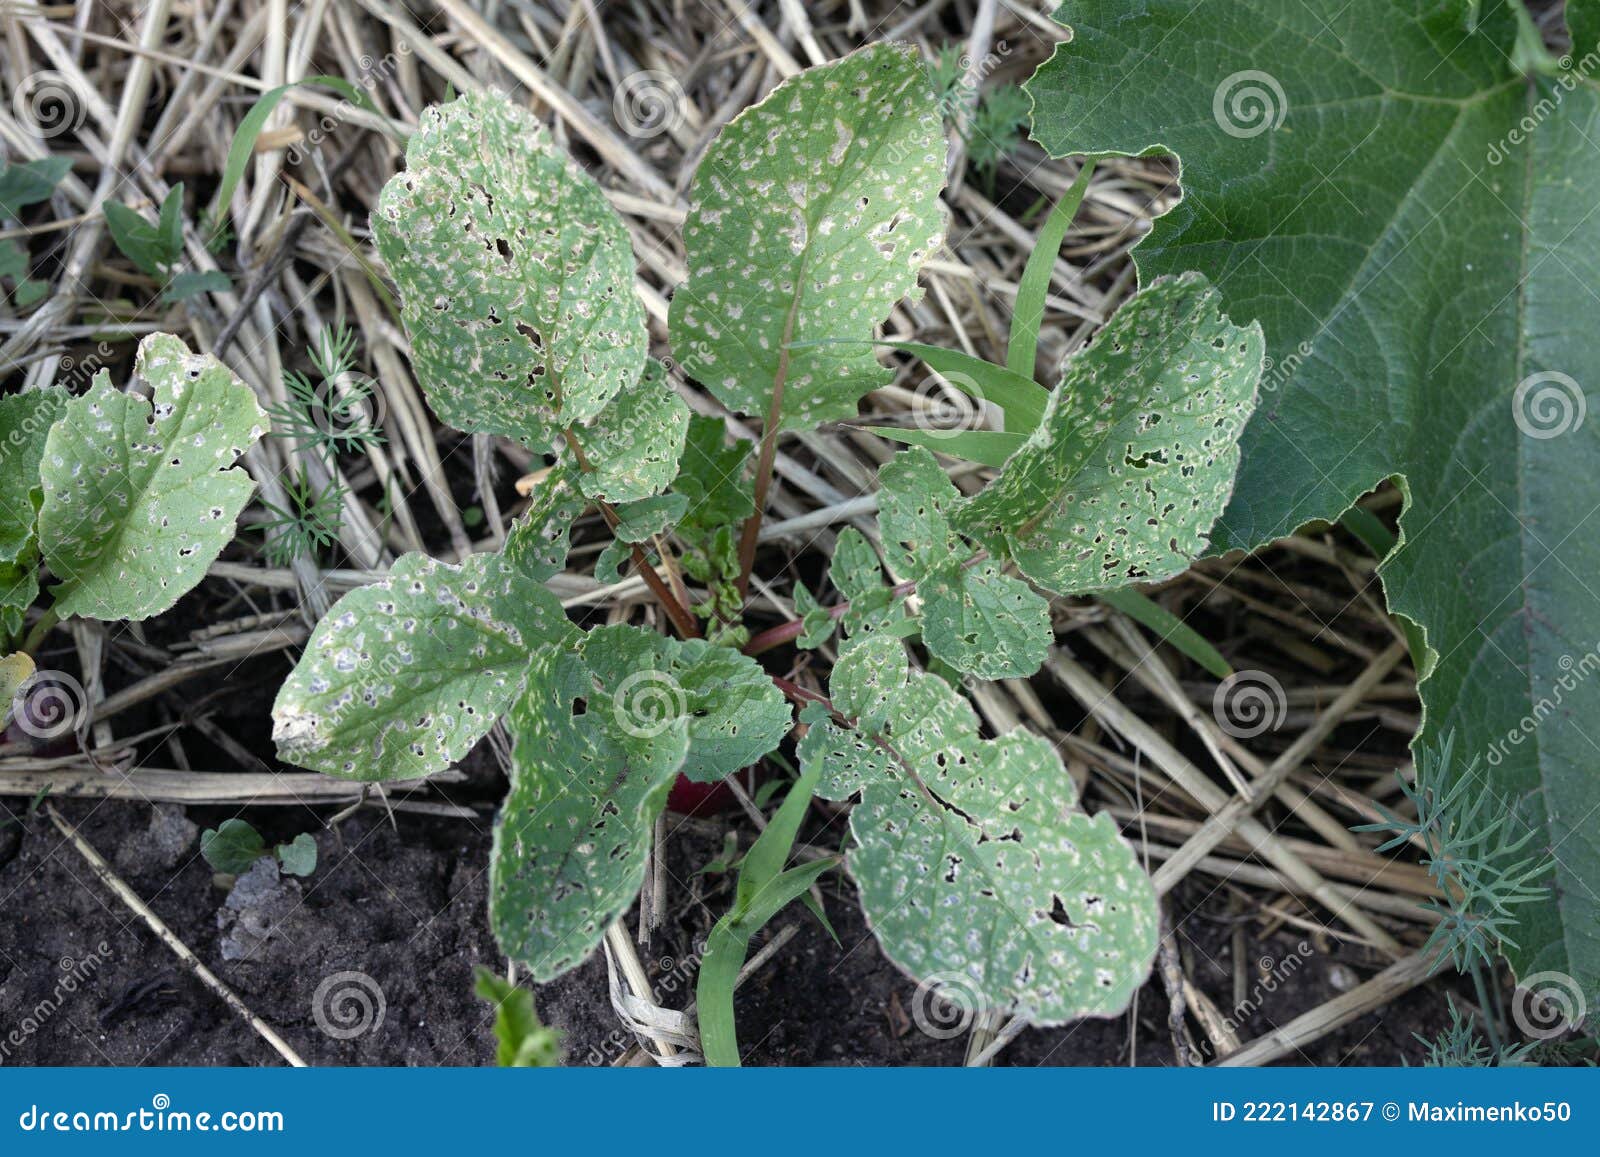 leaky radish leaves affected by leaf beetle or cruciferous flea. phyllotreta cruciferae plants pests